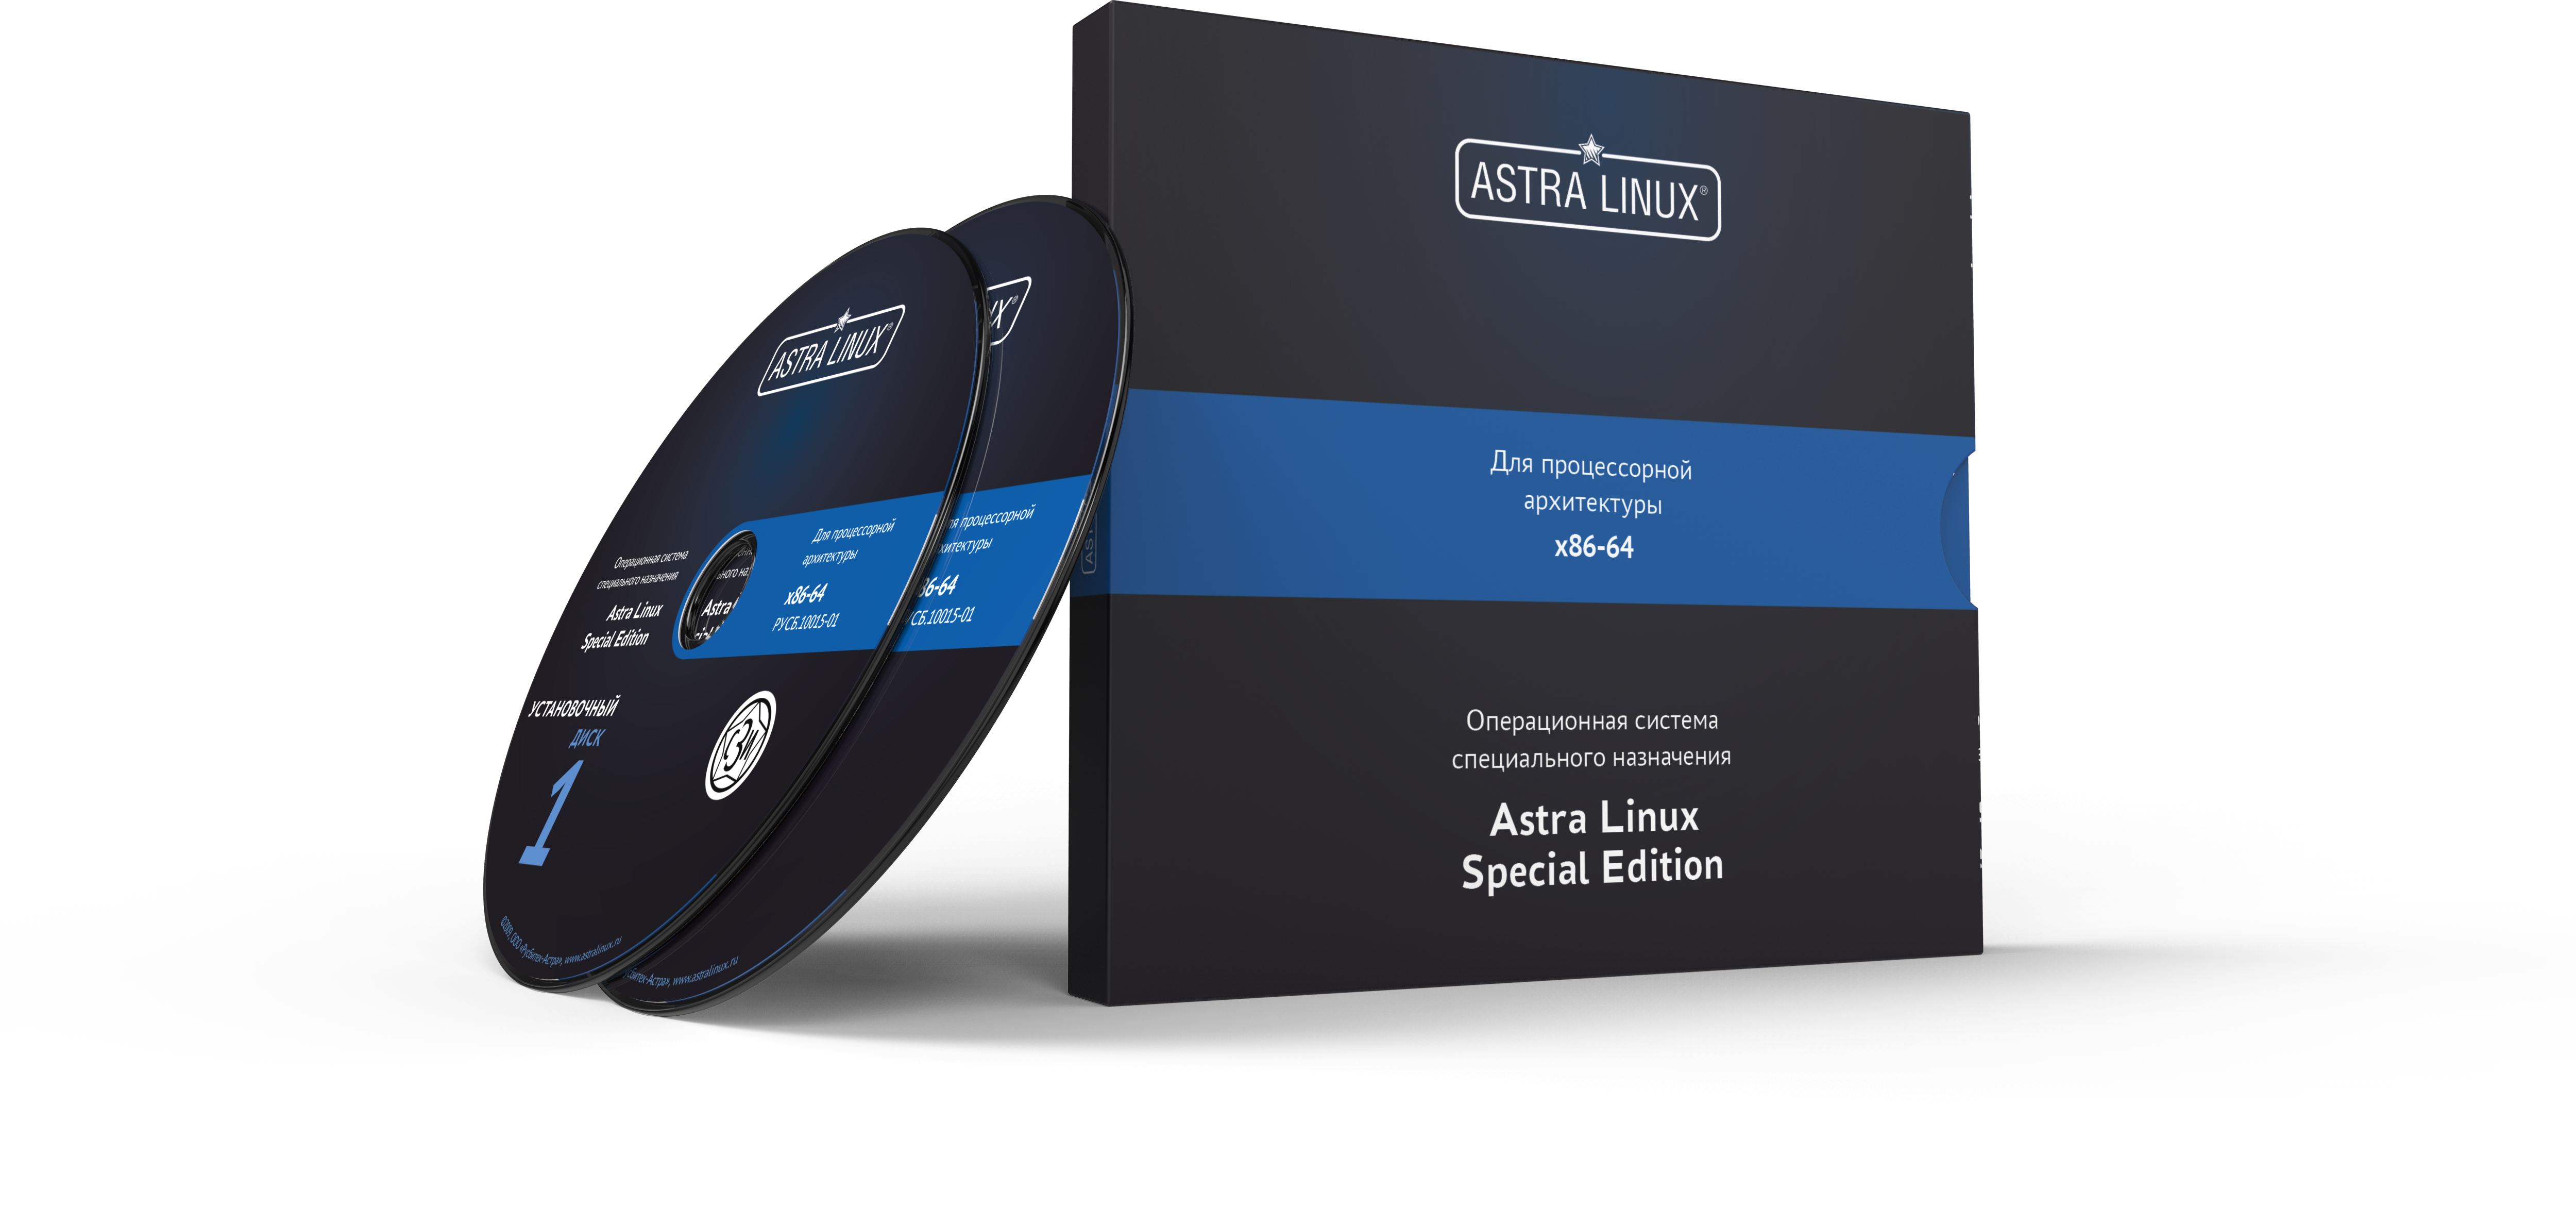 Сертификат ТП Astra Linux Special Edition - Орел, электронный, ТП "Стандарт" на 24 мес.